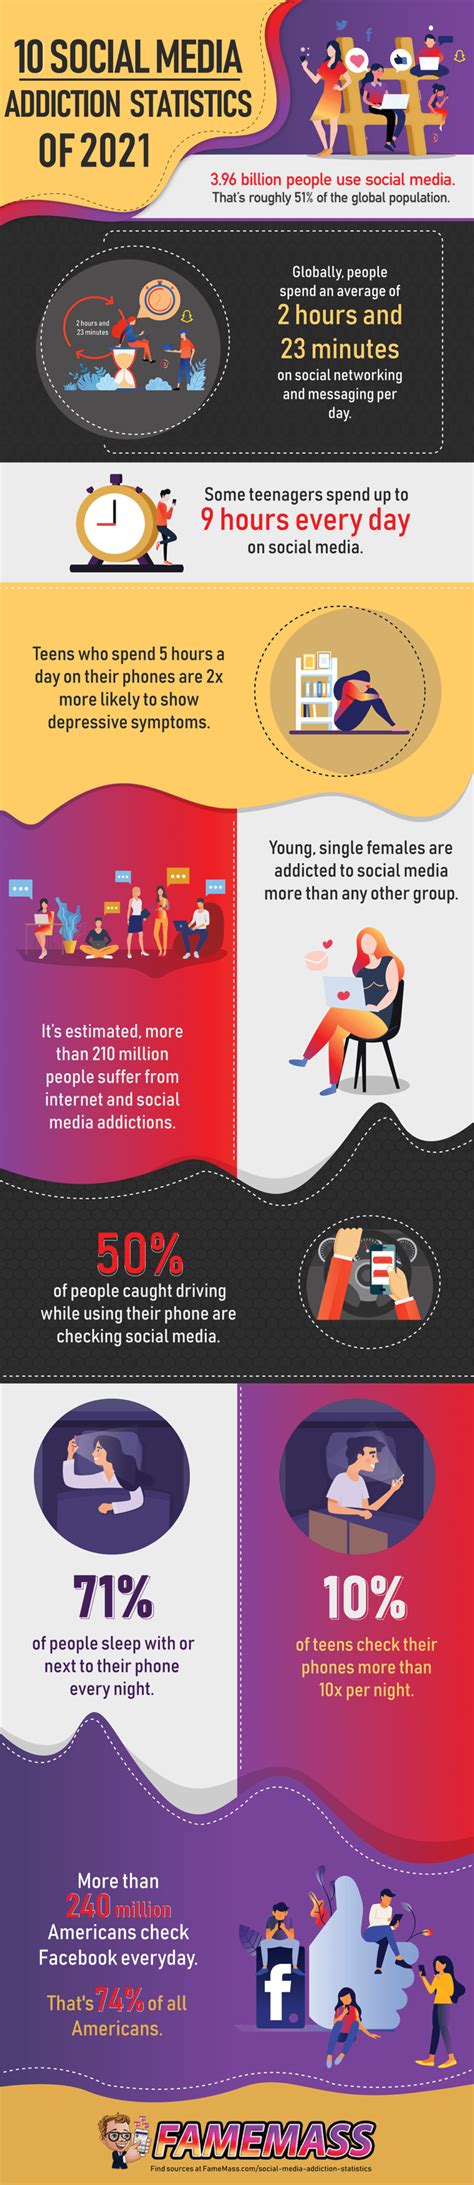 10 Shocking Social Media Addiction Statistics Of 2021